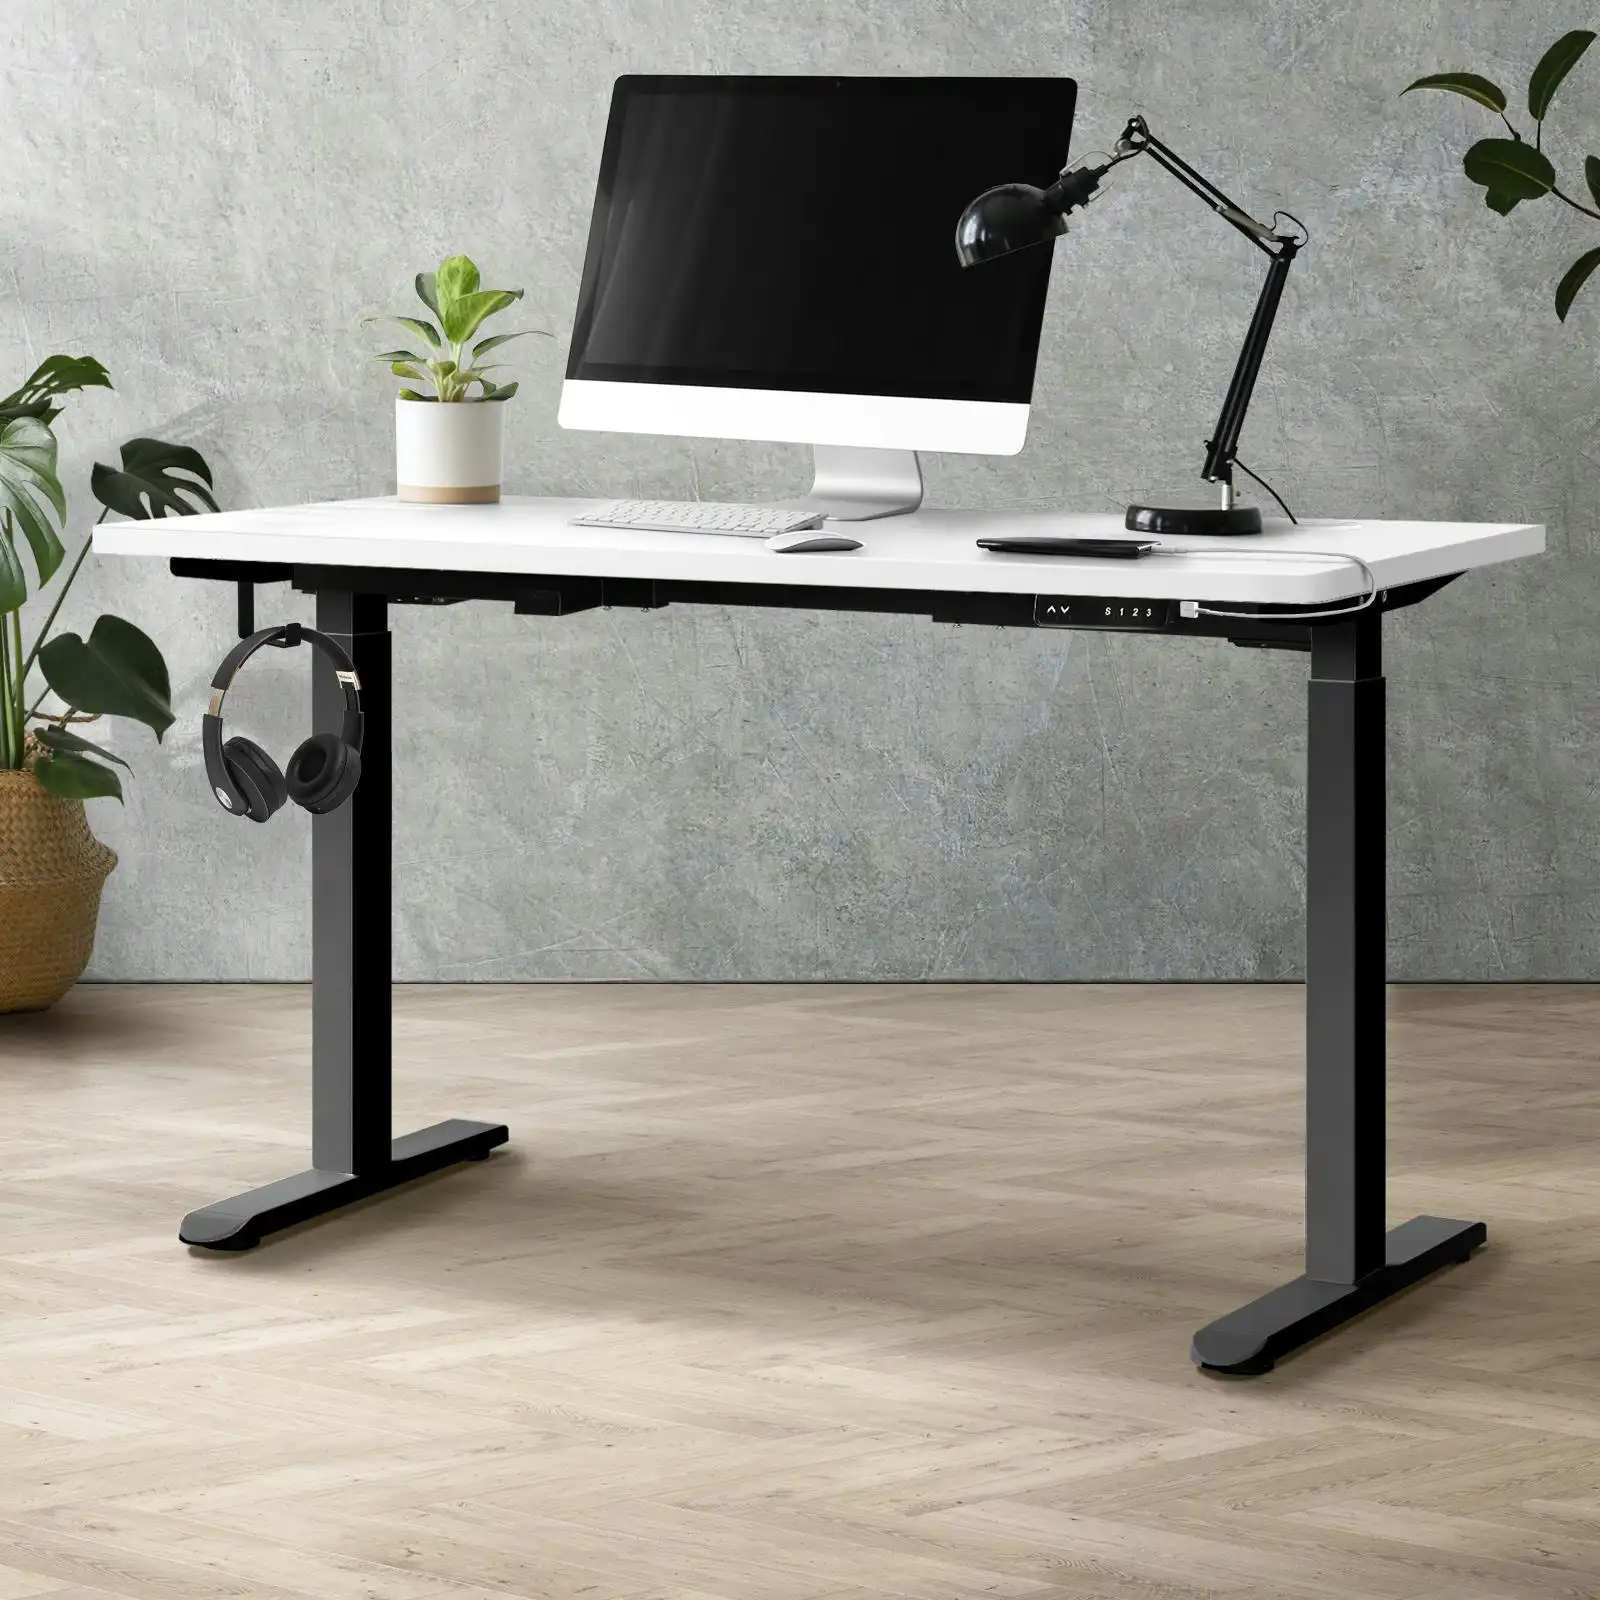 Oikiture 150cm Electric Standing Desk Dual Motor Black Frame White Desktop